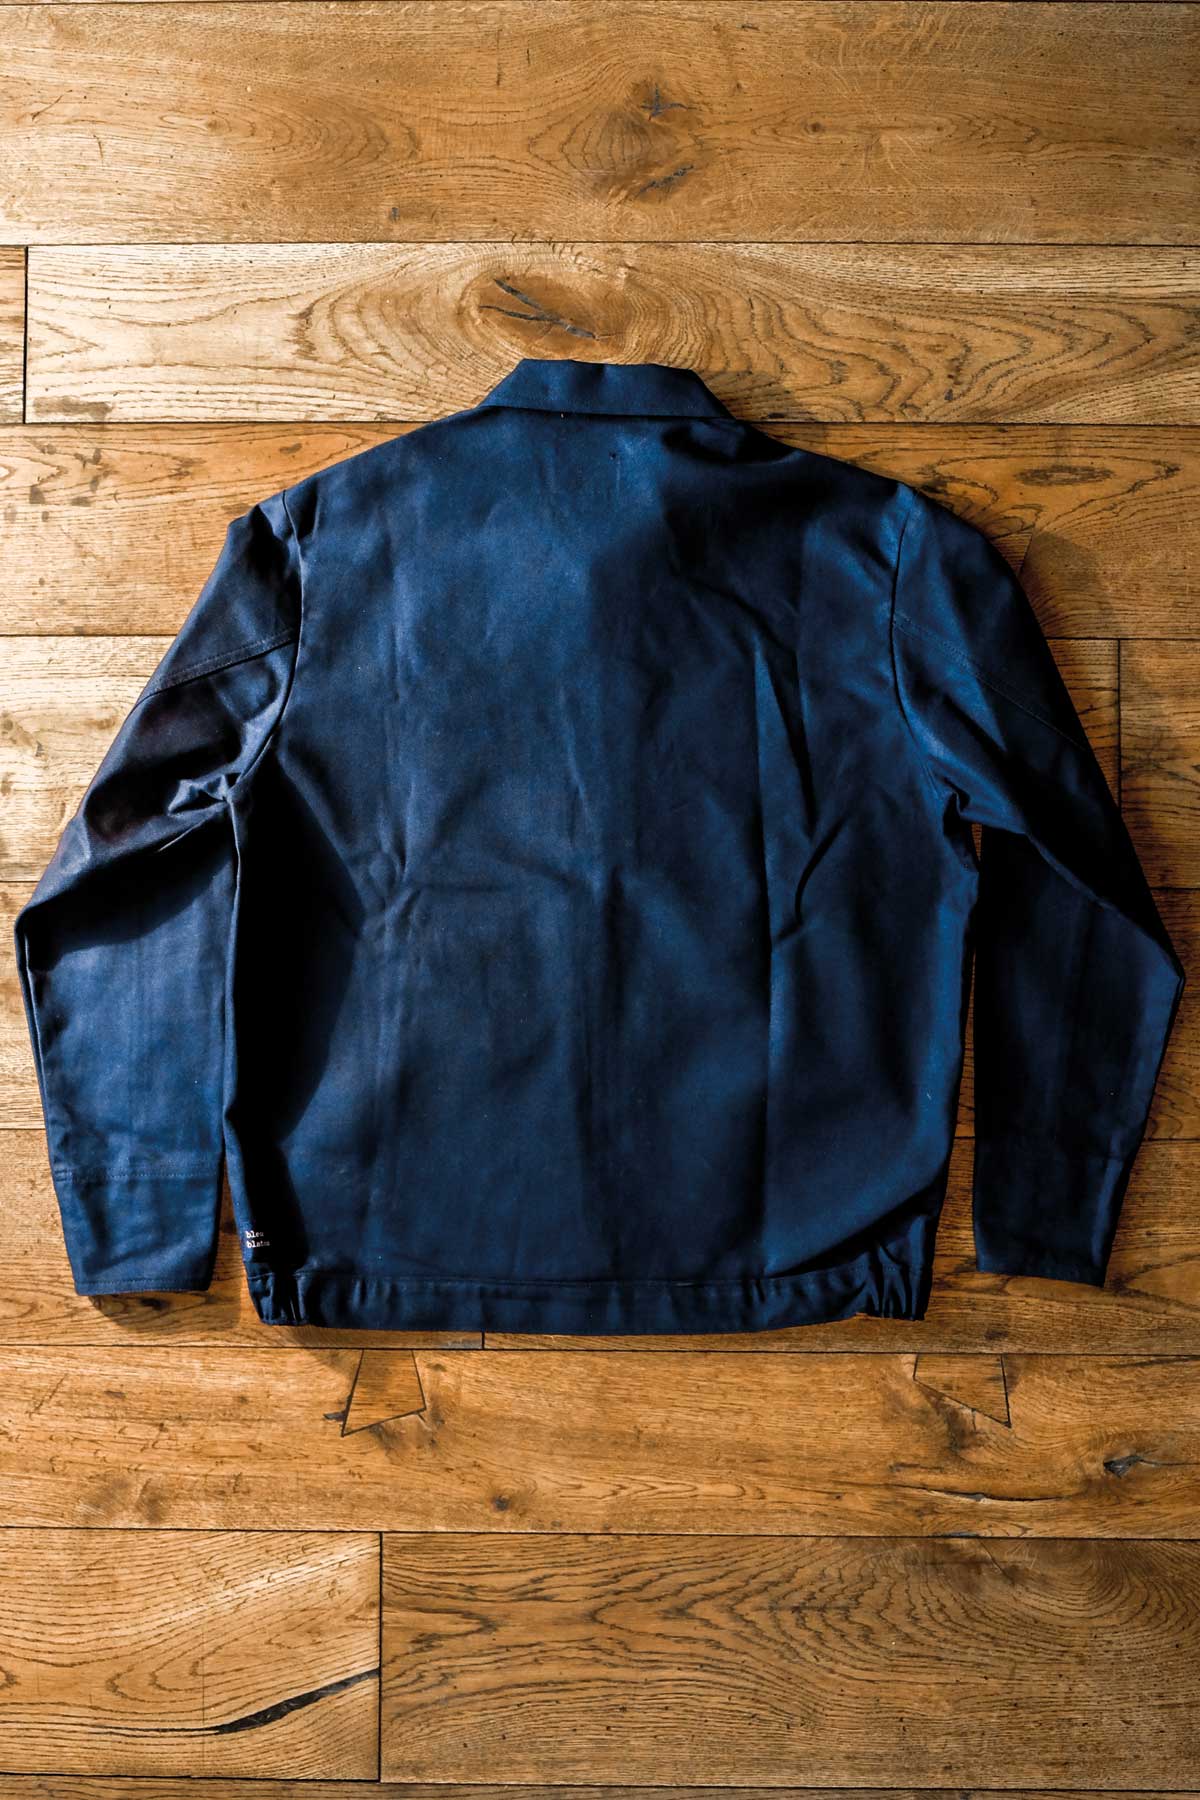 Bleu Blaton - Short Mechanic Worker Jacket in Navy